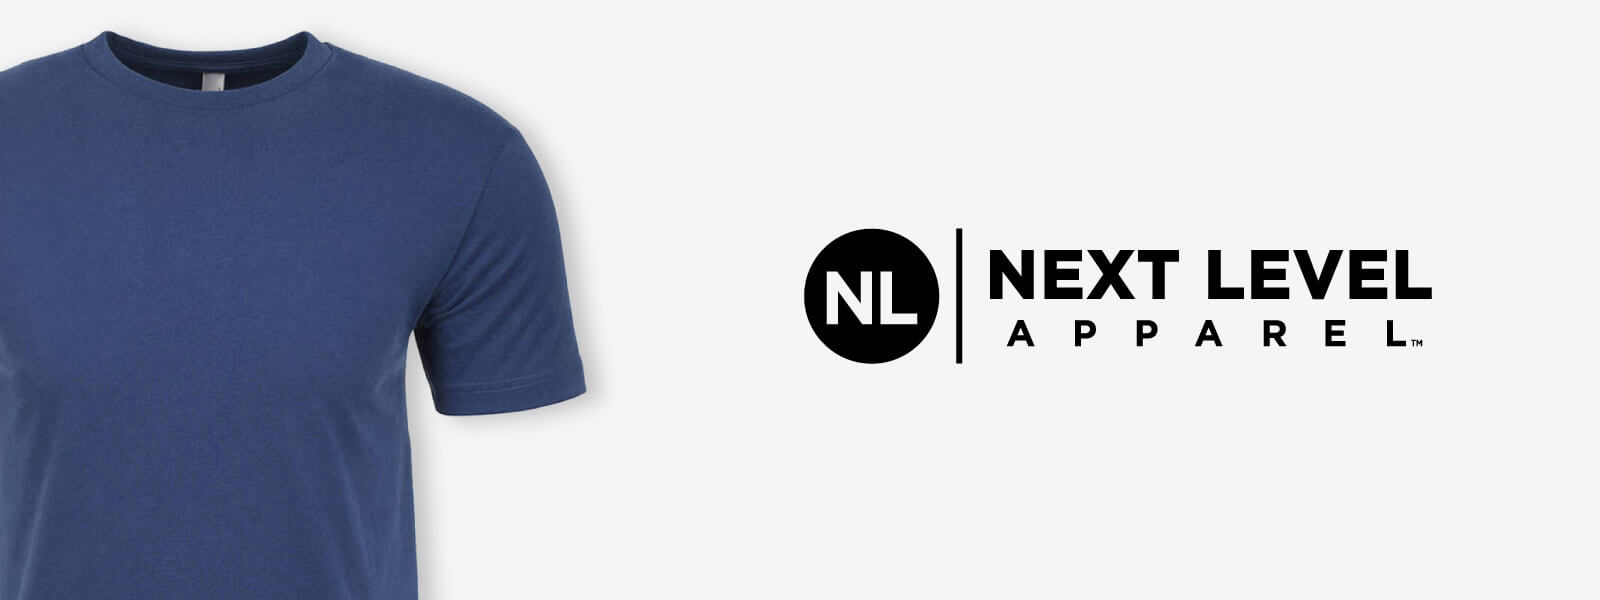 Next Level Apparel T Shirts. Best Custom Tshirt. Company Tee Shirts. Company T-Shirts.